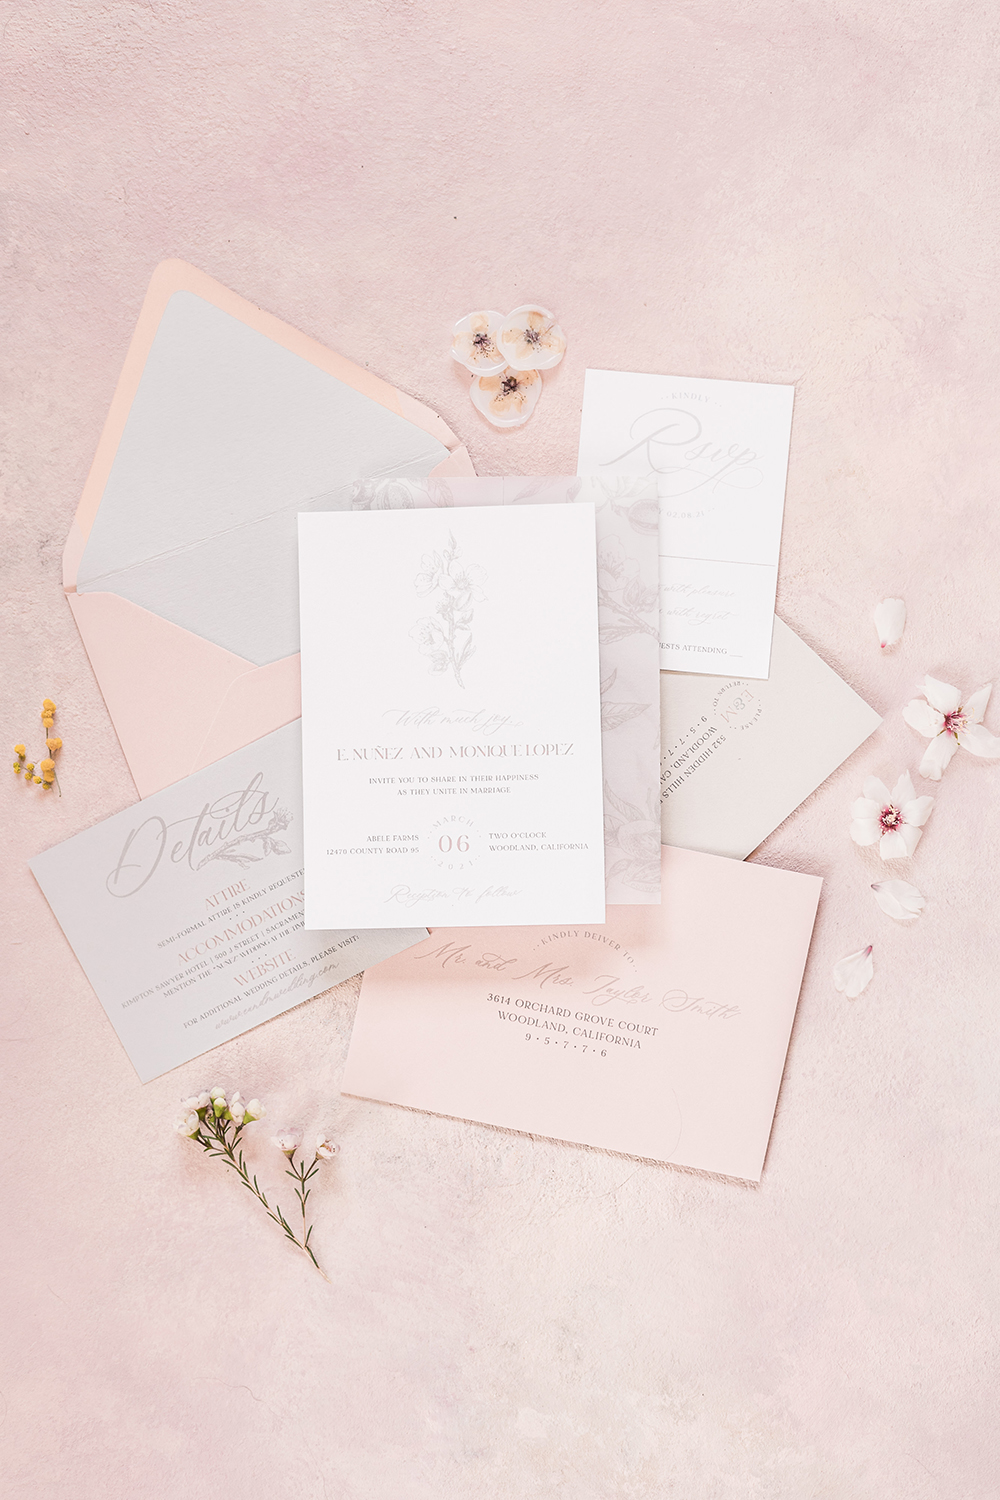 wedding invitation suite featuring almond blossom design elements